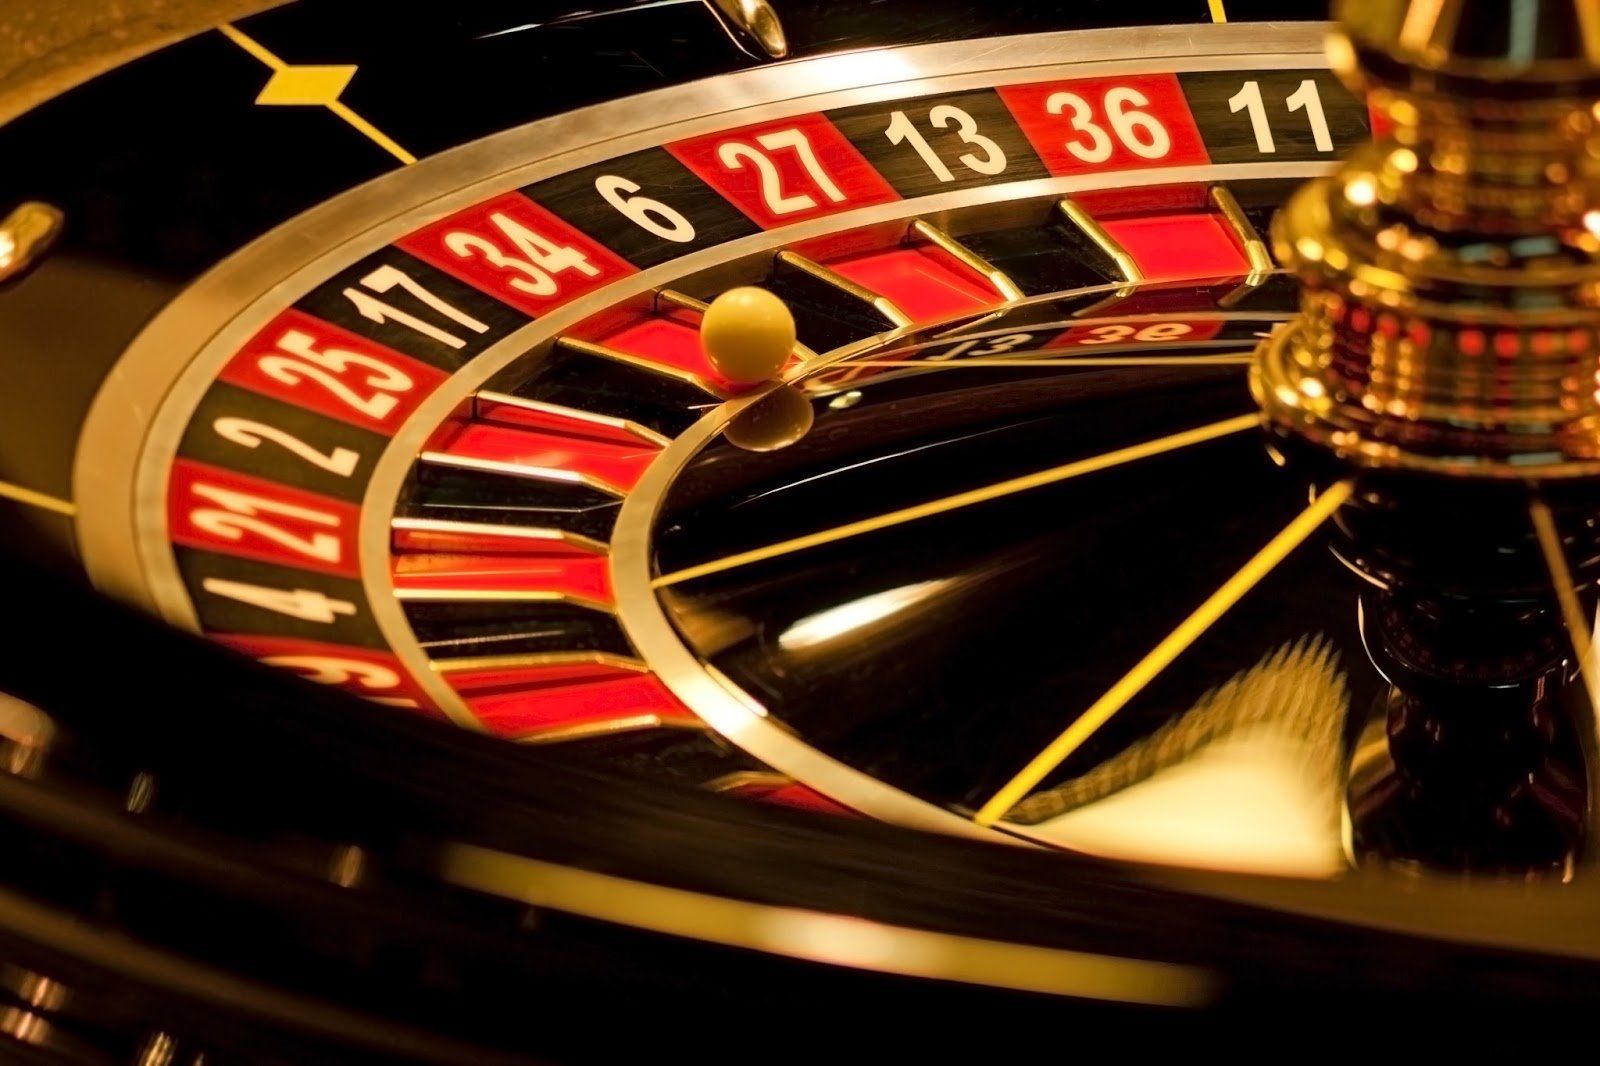 Jackpot Dreams: The Ultimate Casino Slot Adventure Awaits post thumbnail image